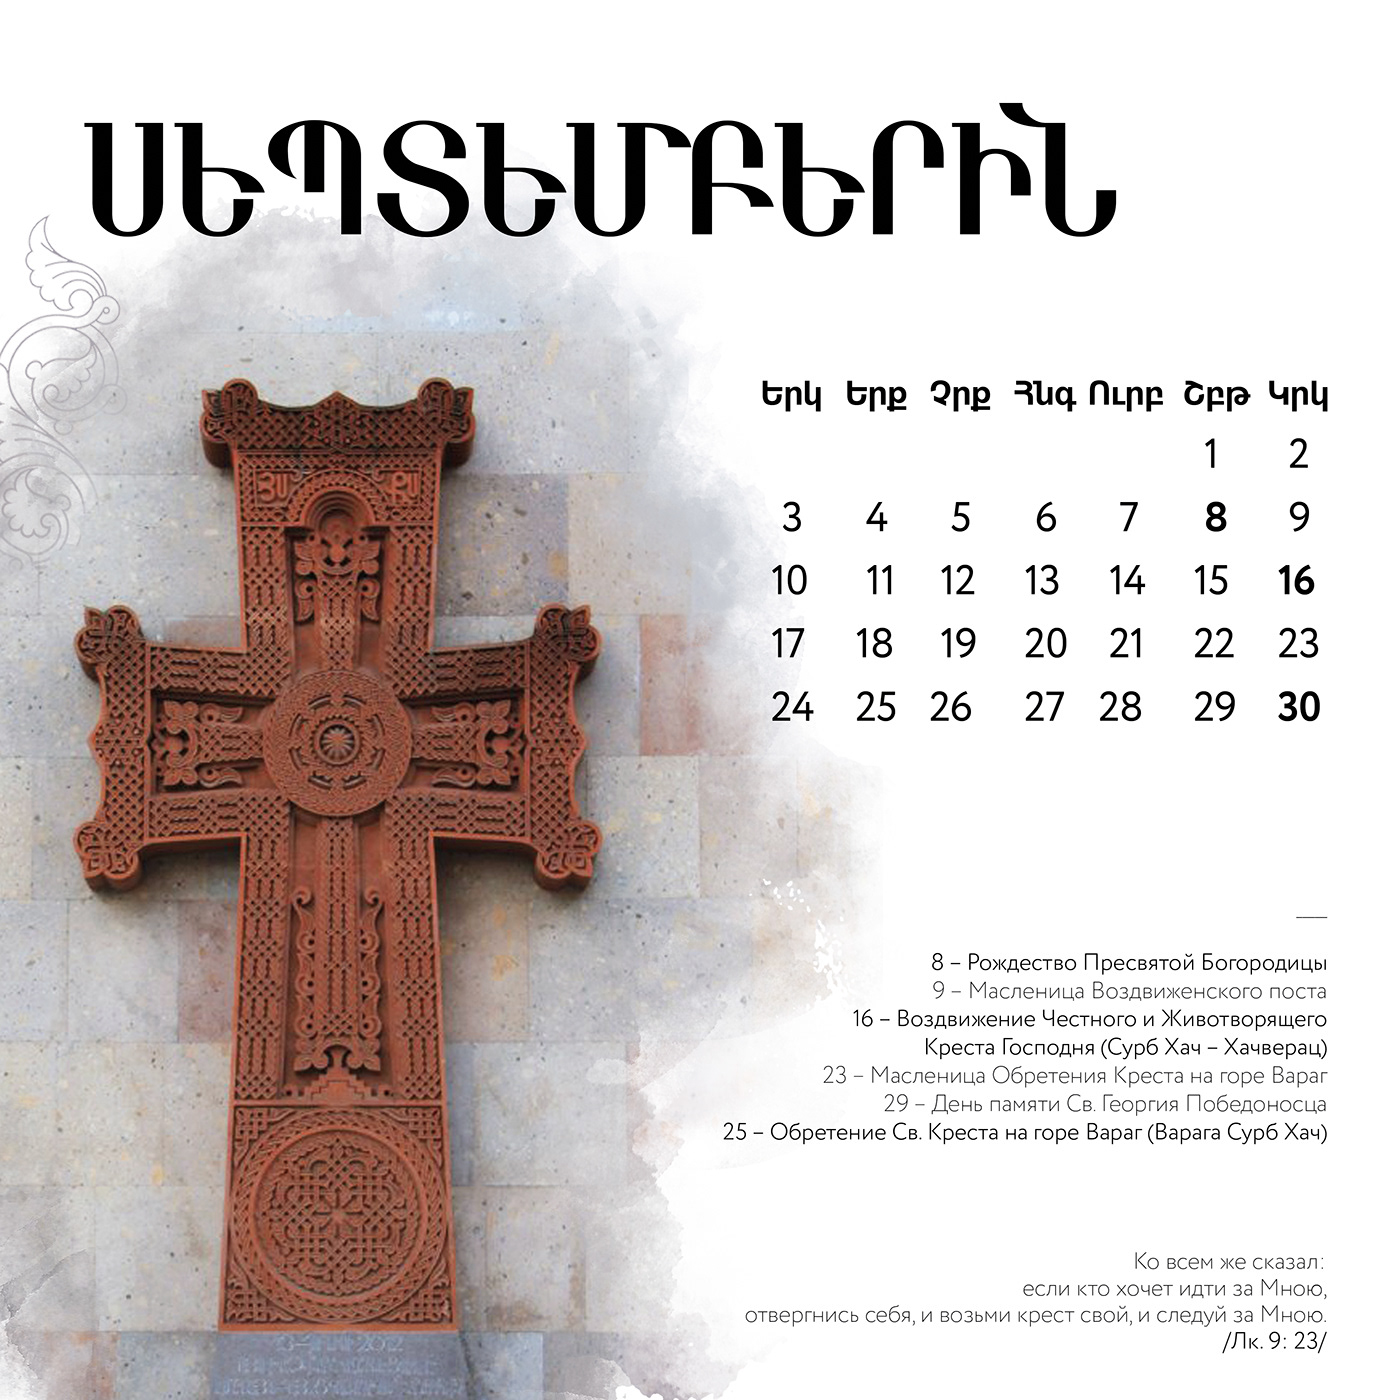 armeniancalendar Armeniandesign armenianchurch calendardesign graphicdesign armeniancalendardesign armeniangraphicdesign armenianstyle Armenia Hayastan